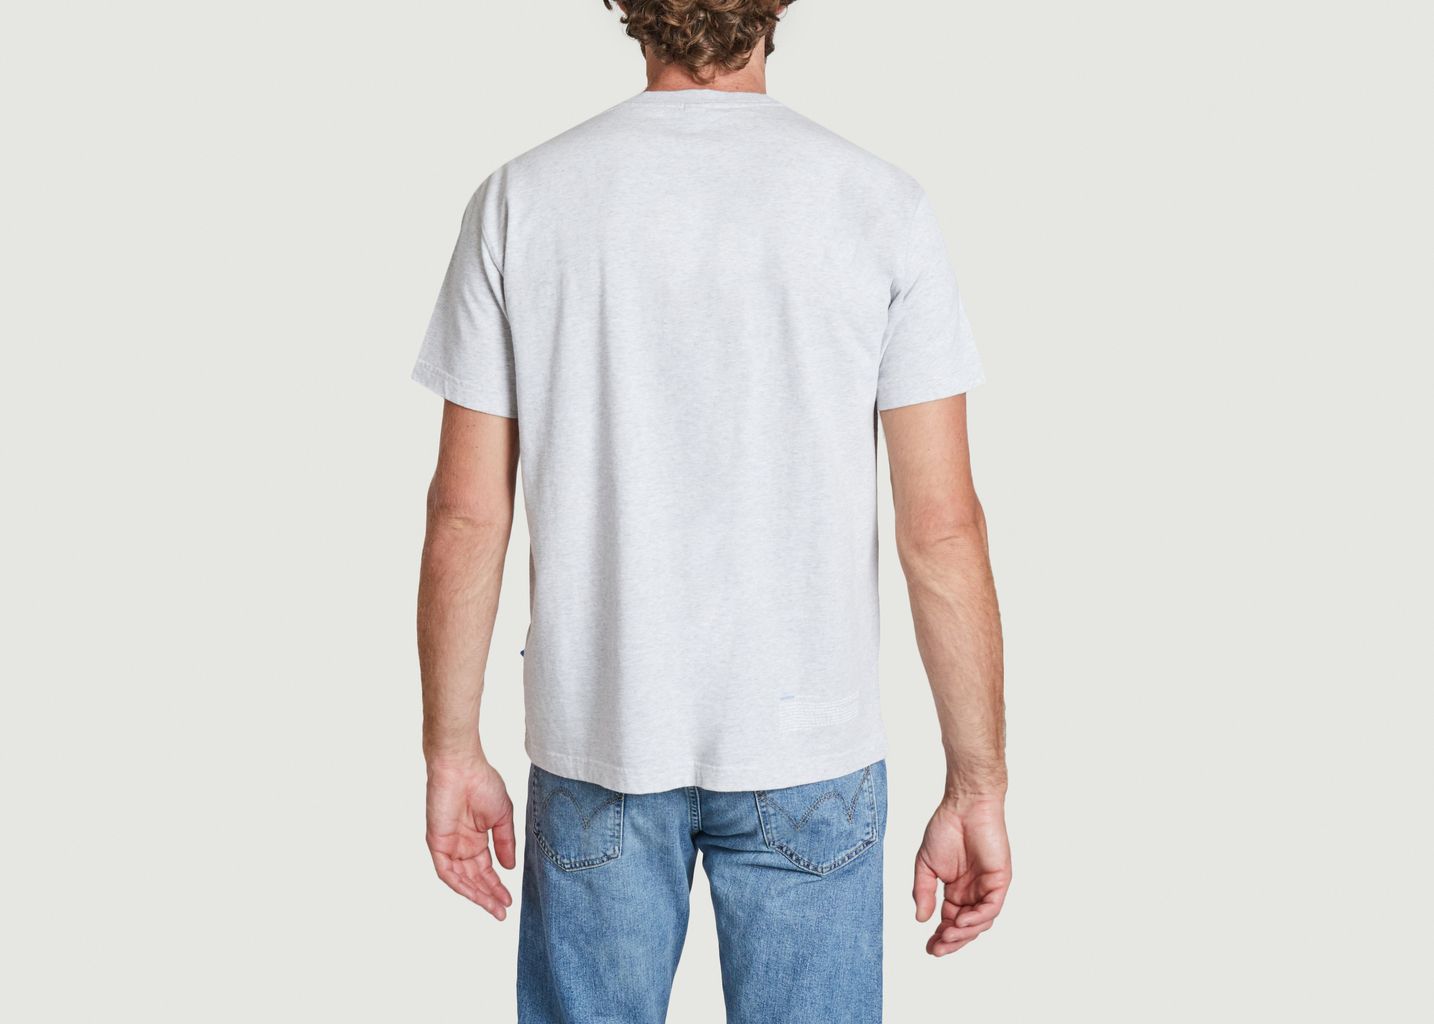 Motto T-shirt - Reception Clothing